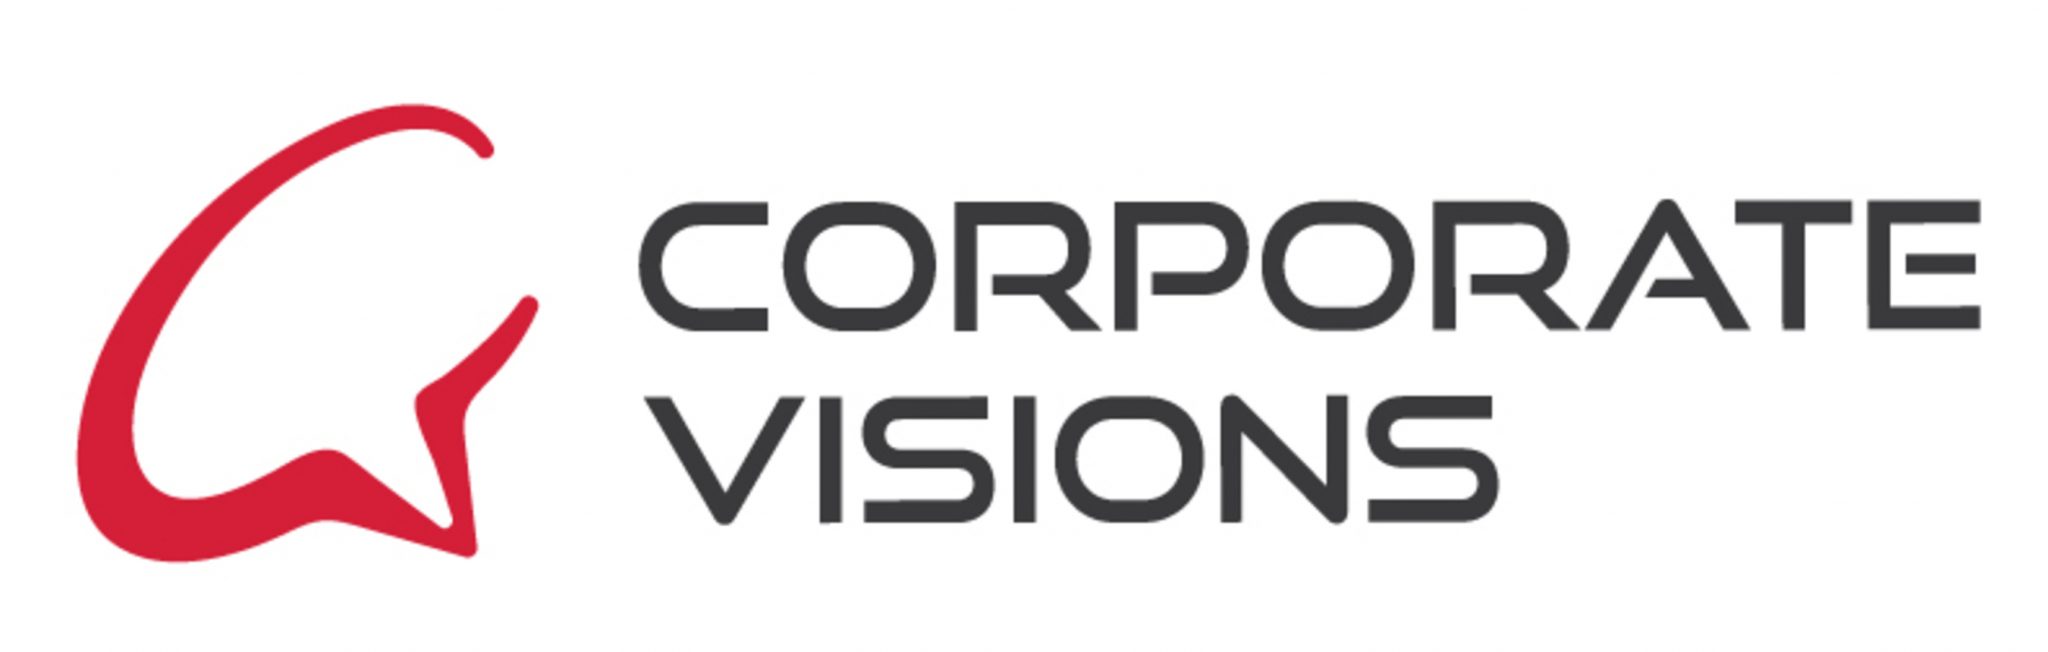 Corporate visions logo.